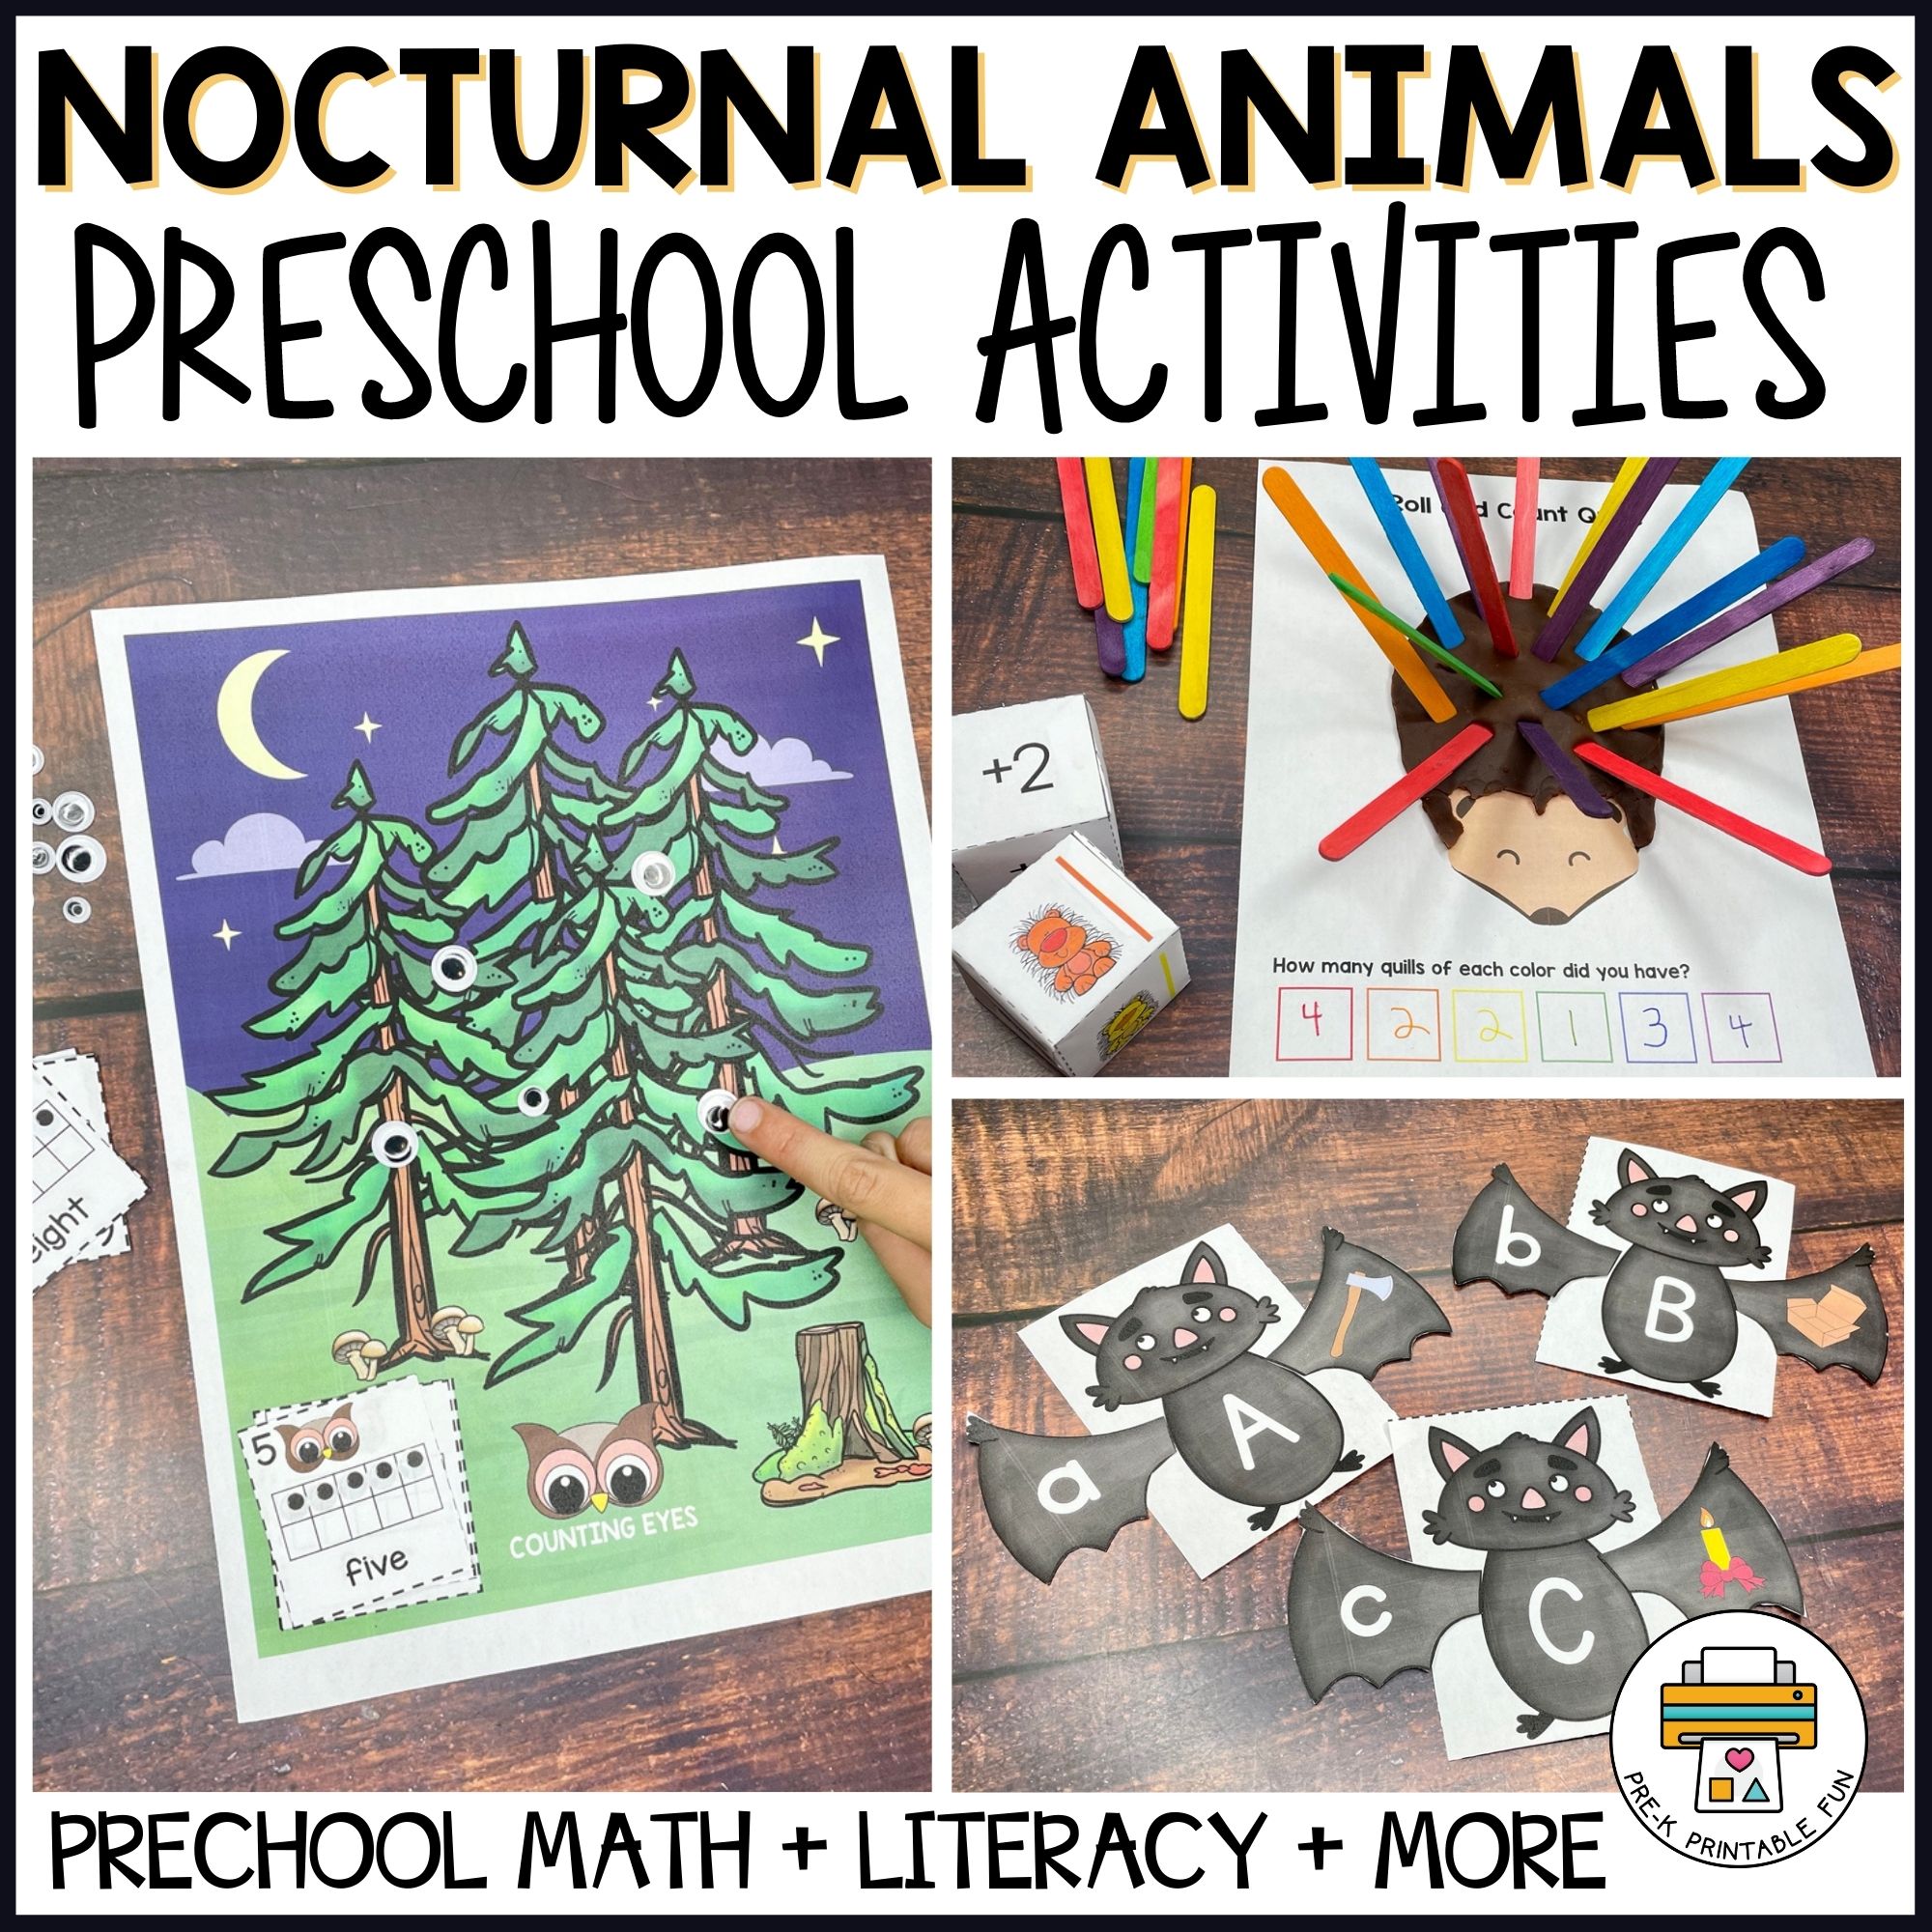 Nocturnal Animals Preschool Activity Pack